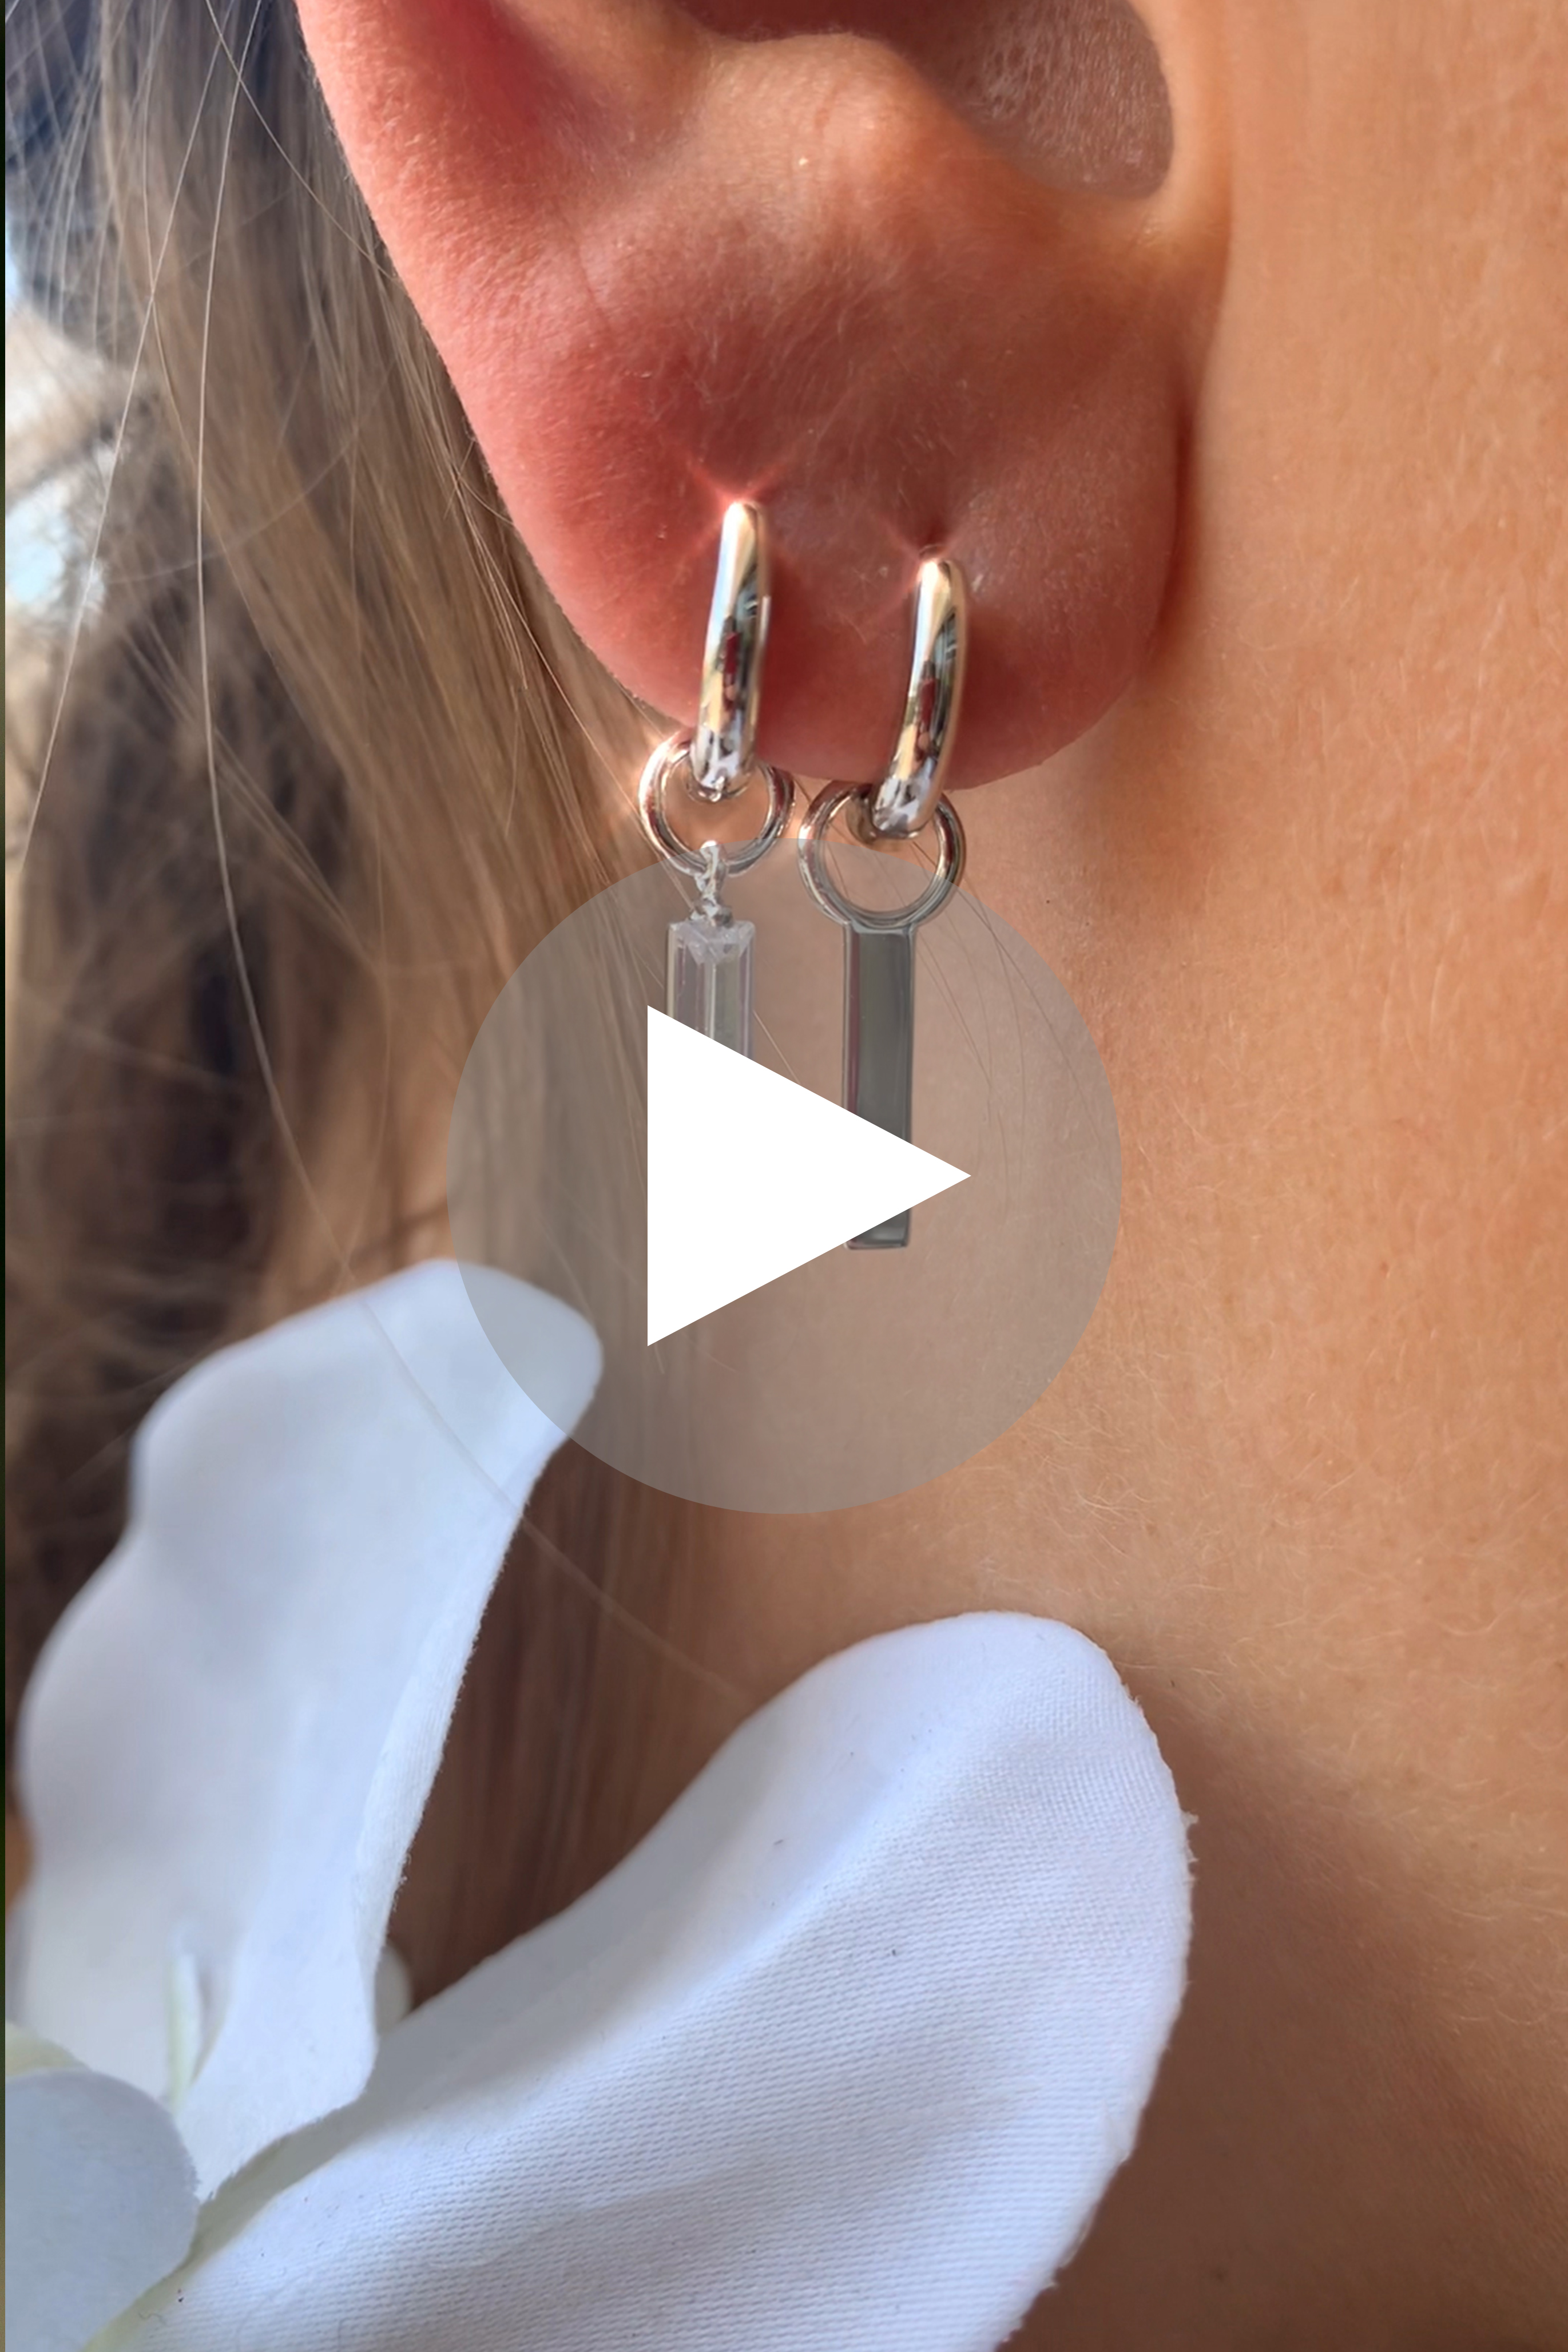 15mm ZINZI Sterling Silver Earrings Pendants Rectangular White ZICH2056 (excl. hoop earrings)